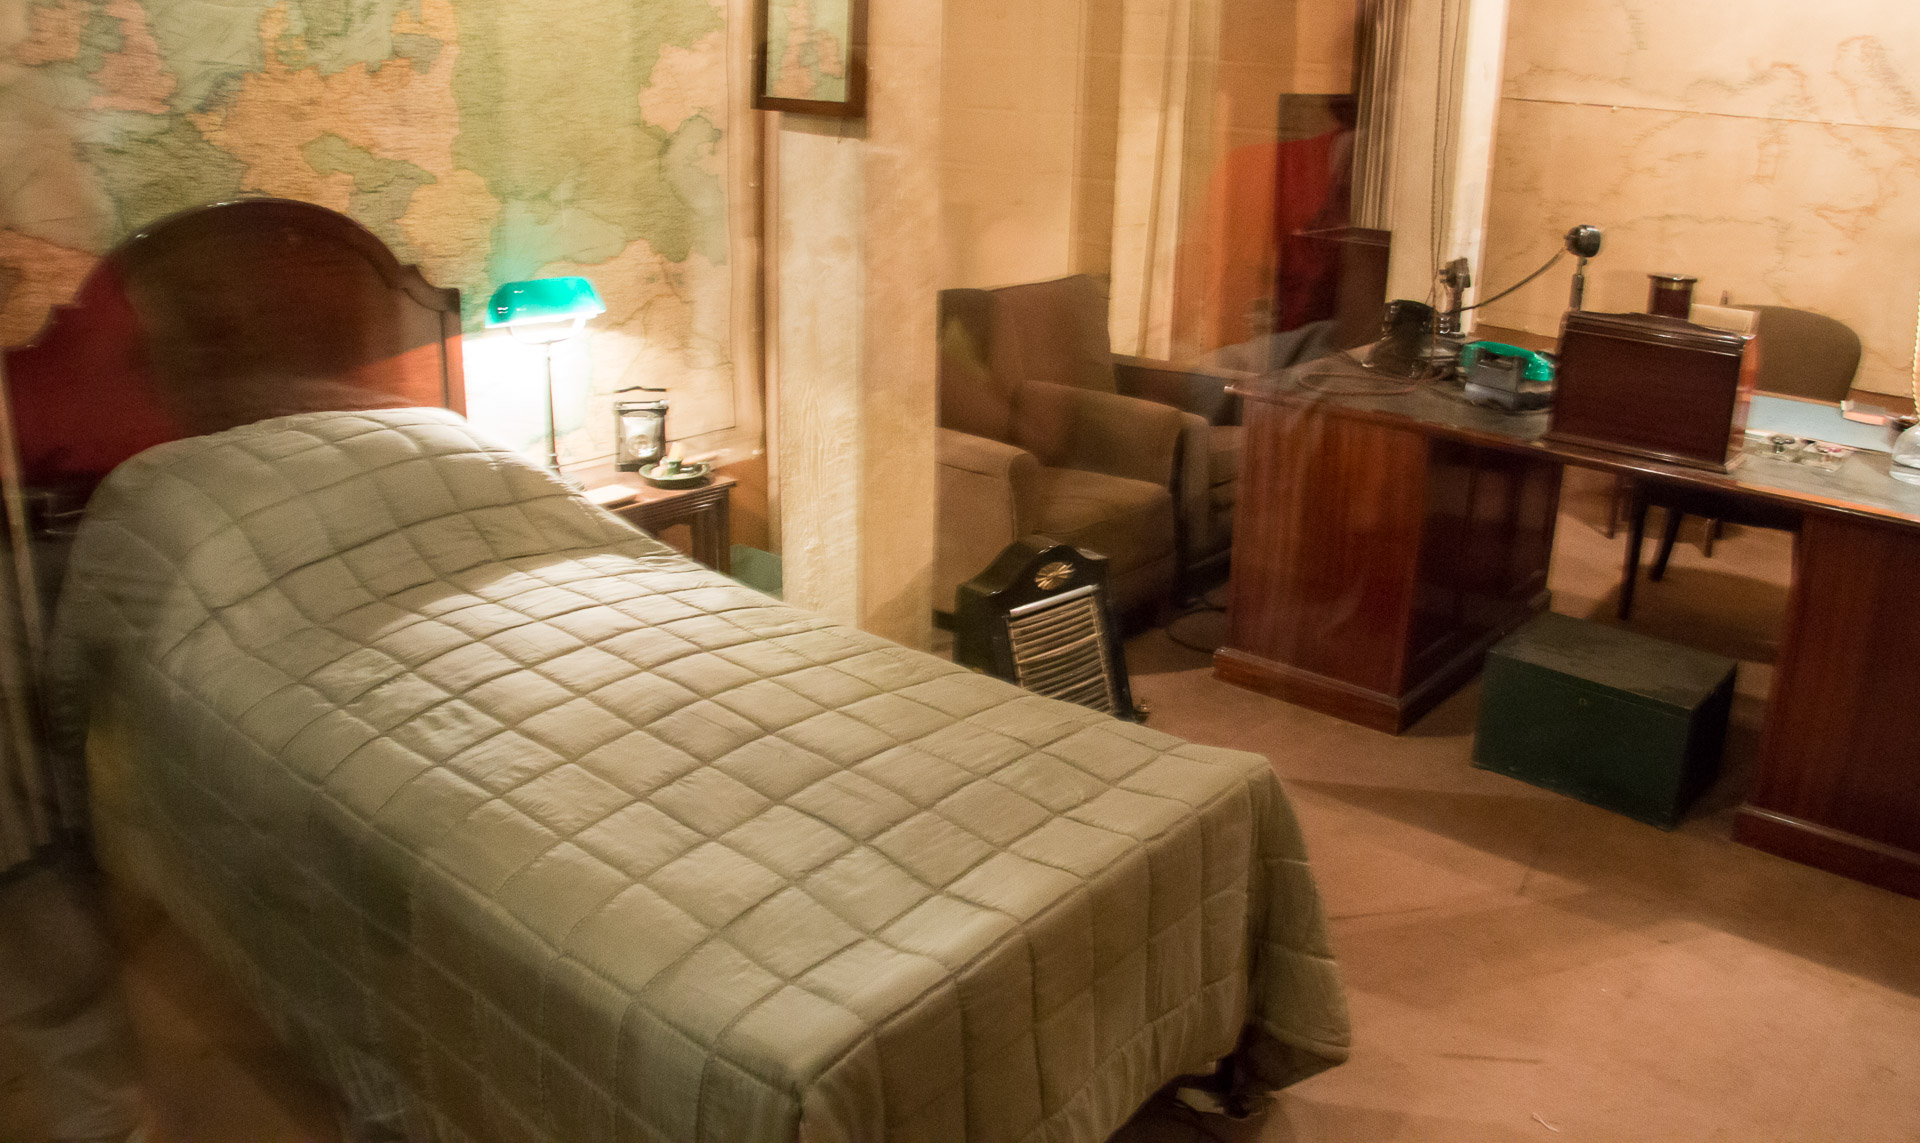 Churchill's bedroom at the Churchill War Rooms in London